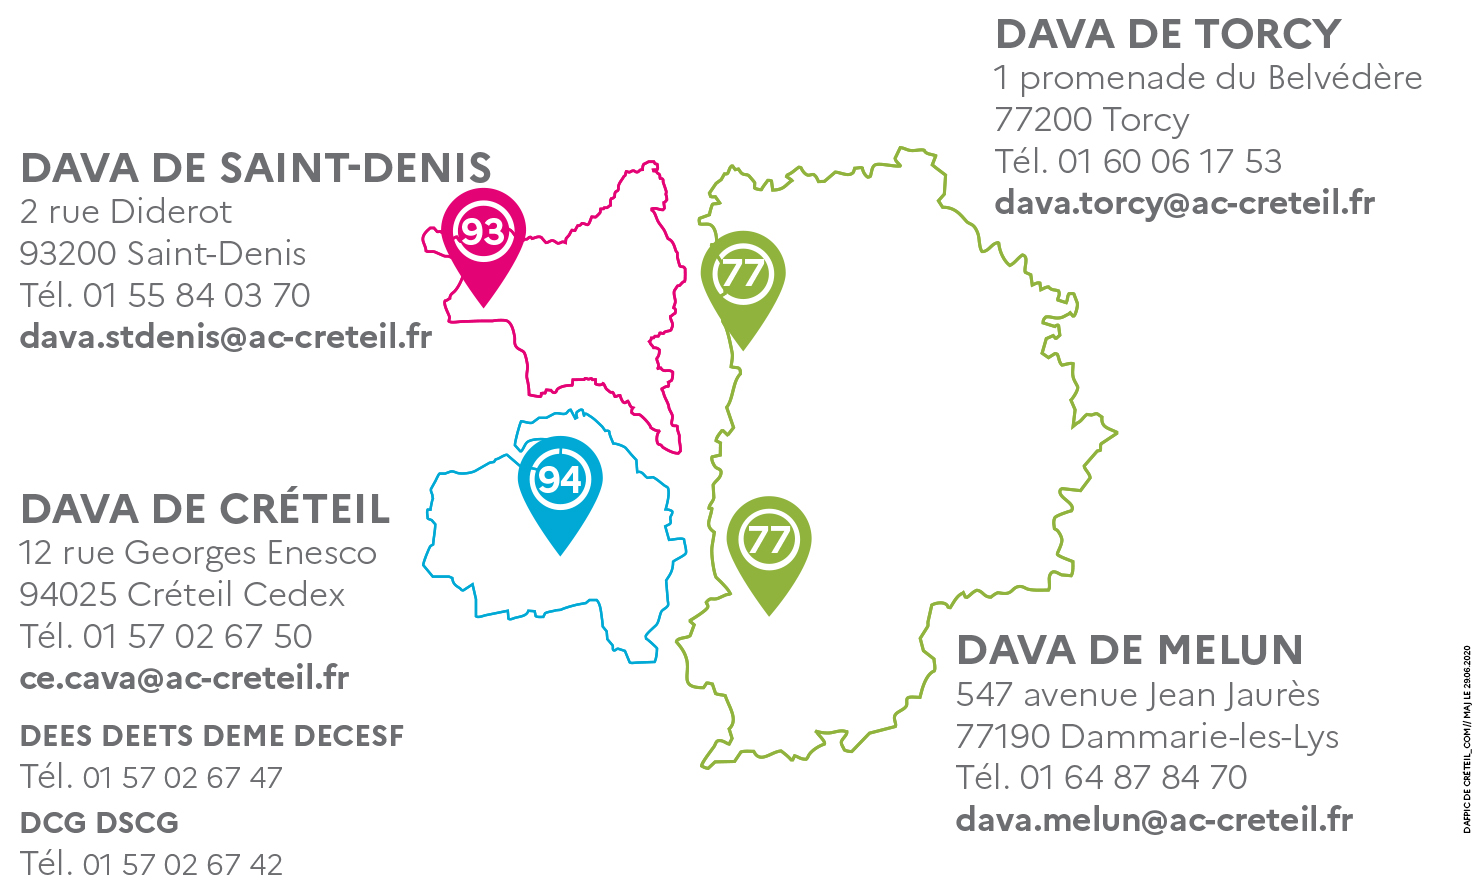 bluse Kvalifikation ligegyldighed DAVA | Nos centres de validation d'Île-de-France (77, 93, 94) | Forpro  Créteil